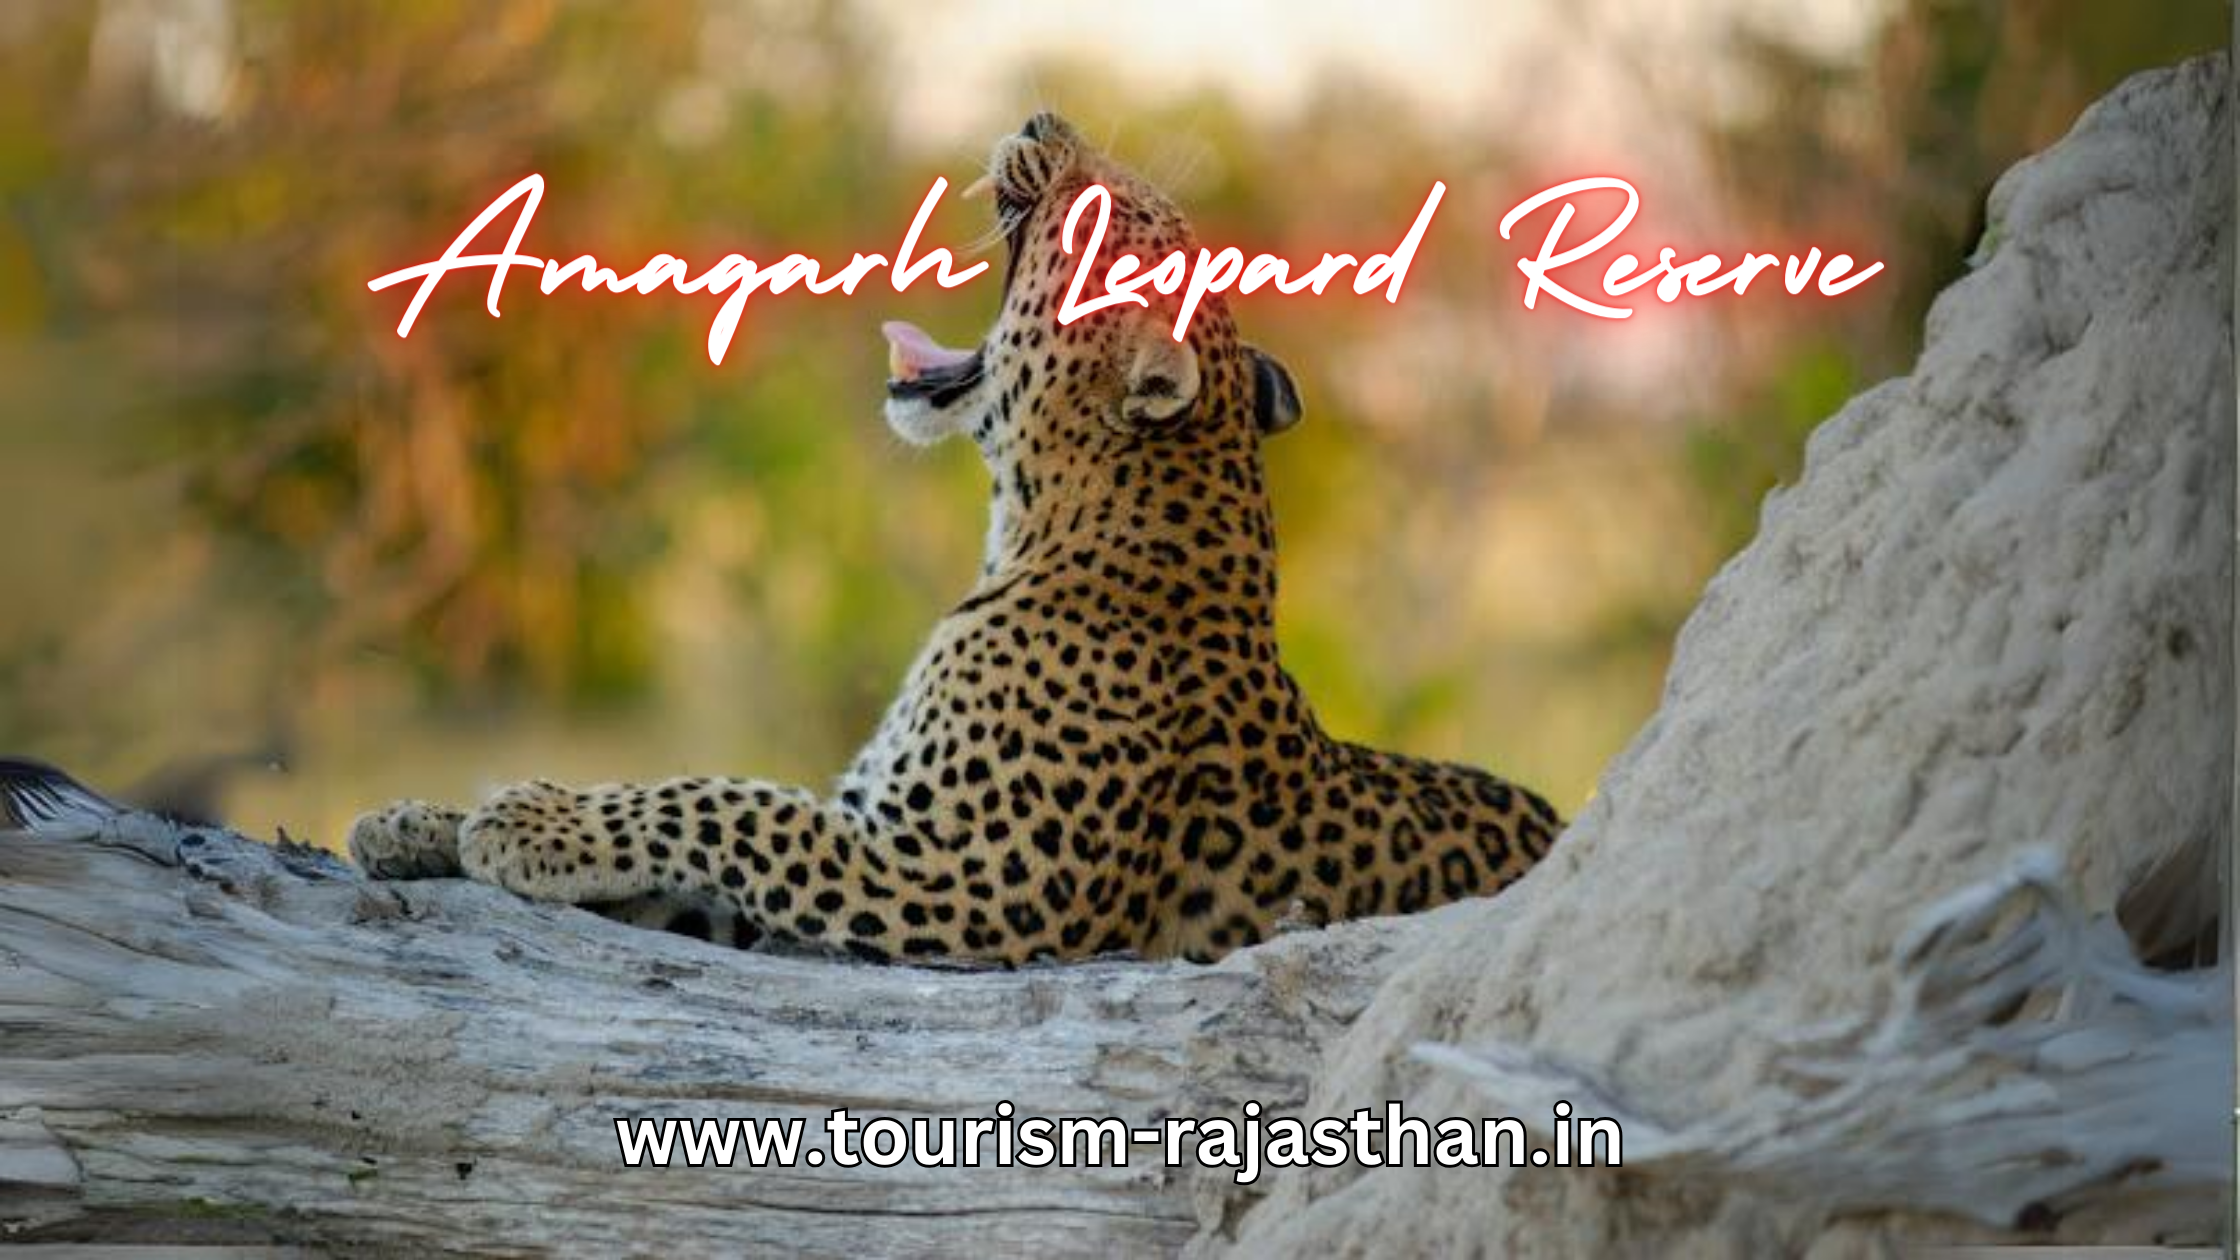 amagarh leopard reserve